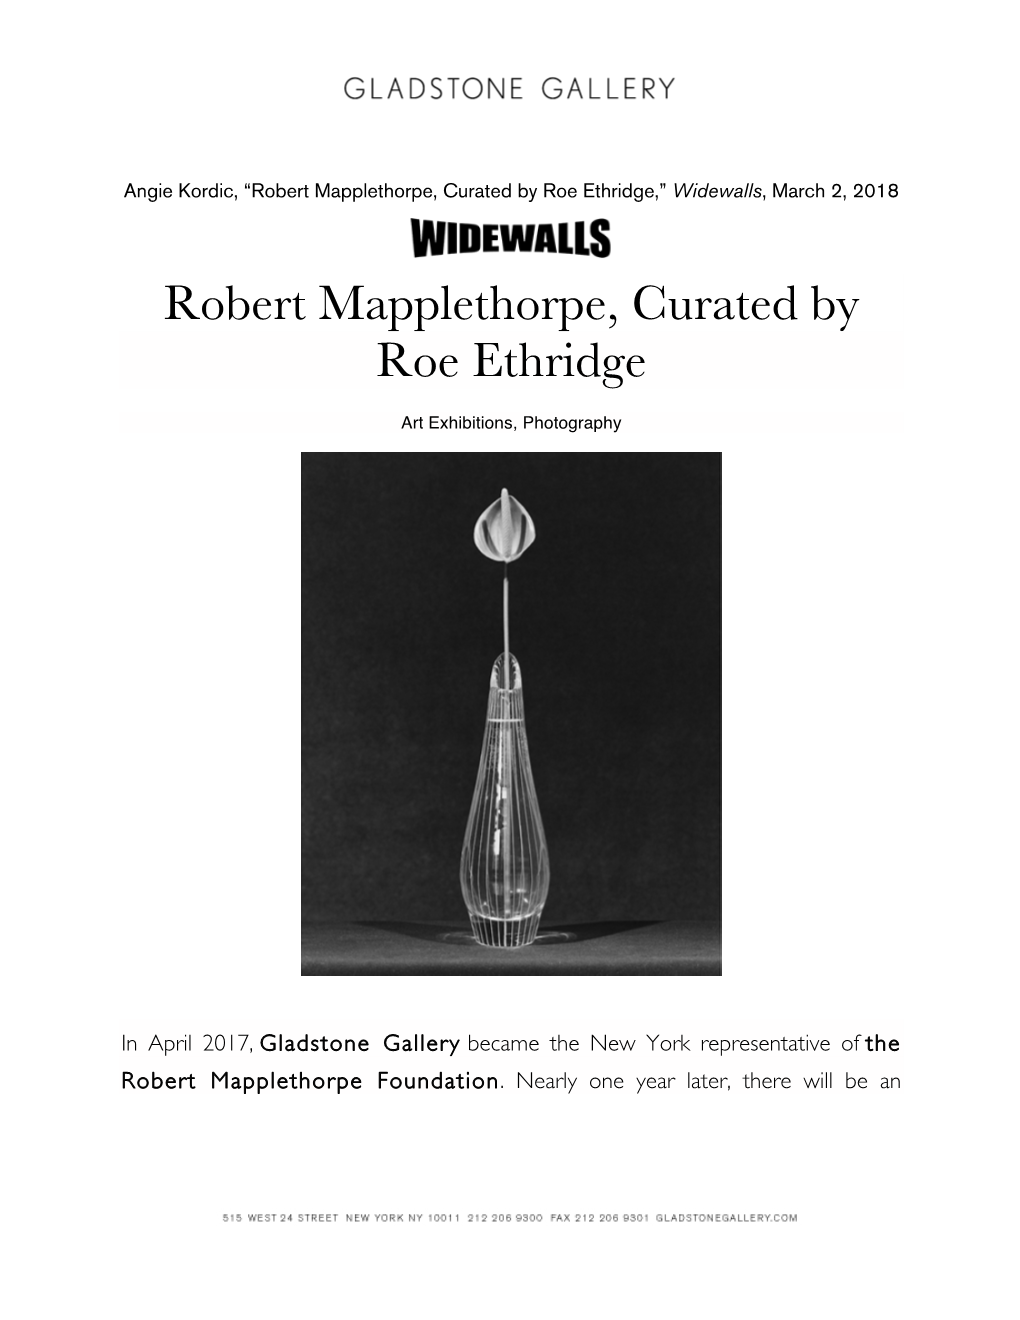 Robert Mapplethorpe, Curated by Roe Ethridge,” Widewalls, March 2, 2018